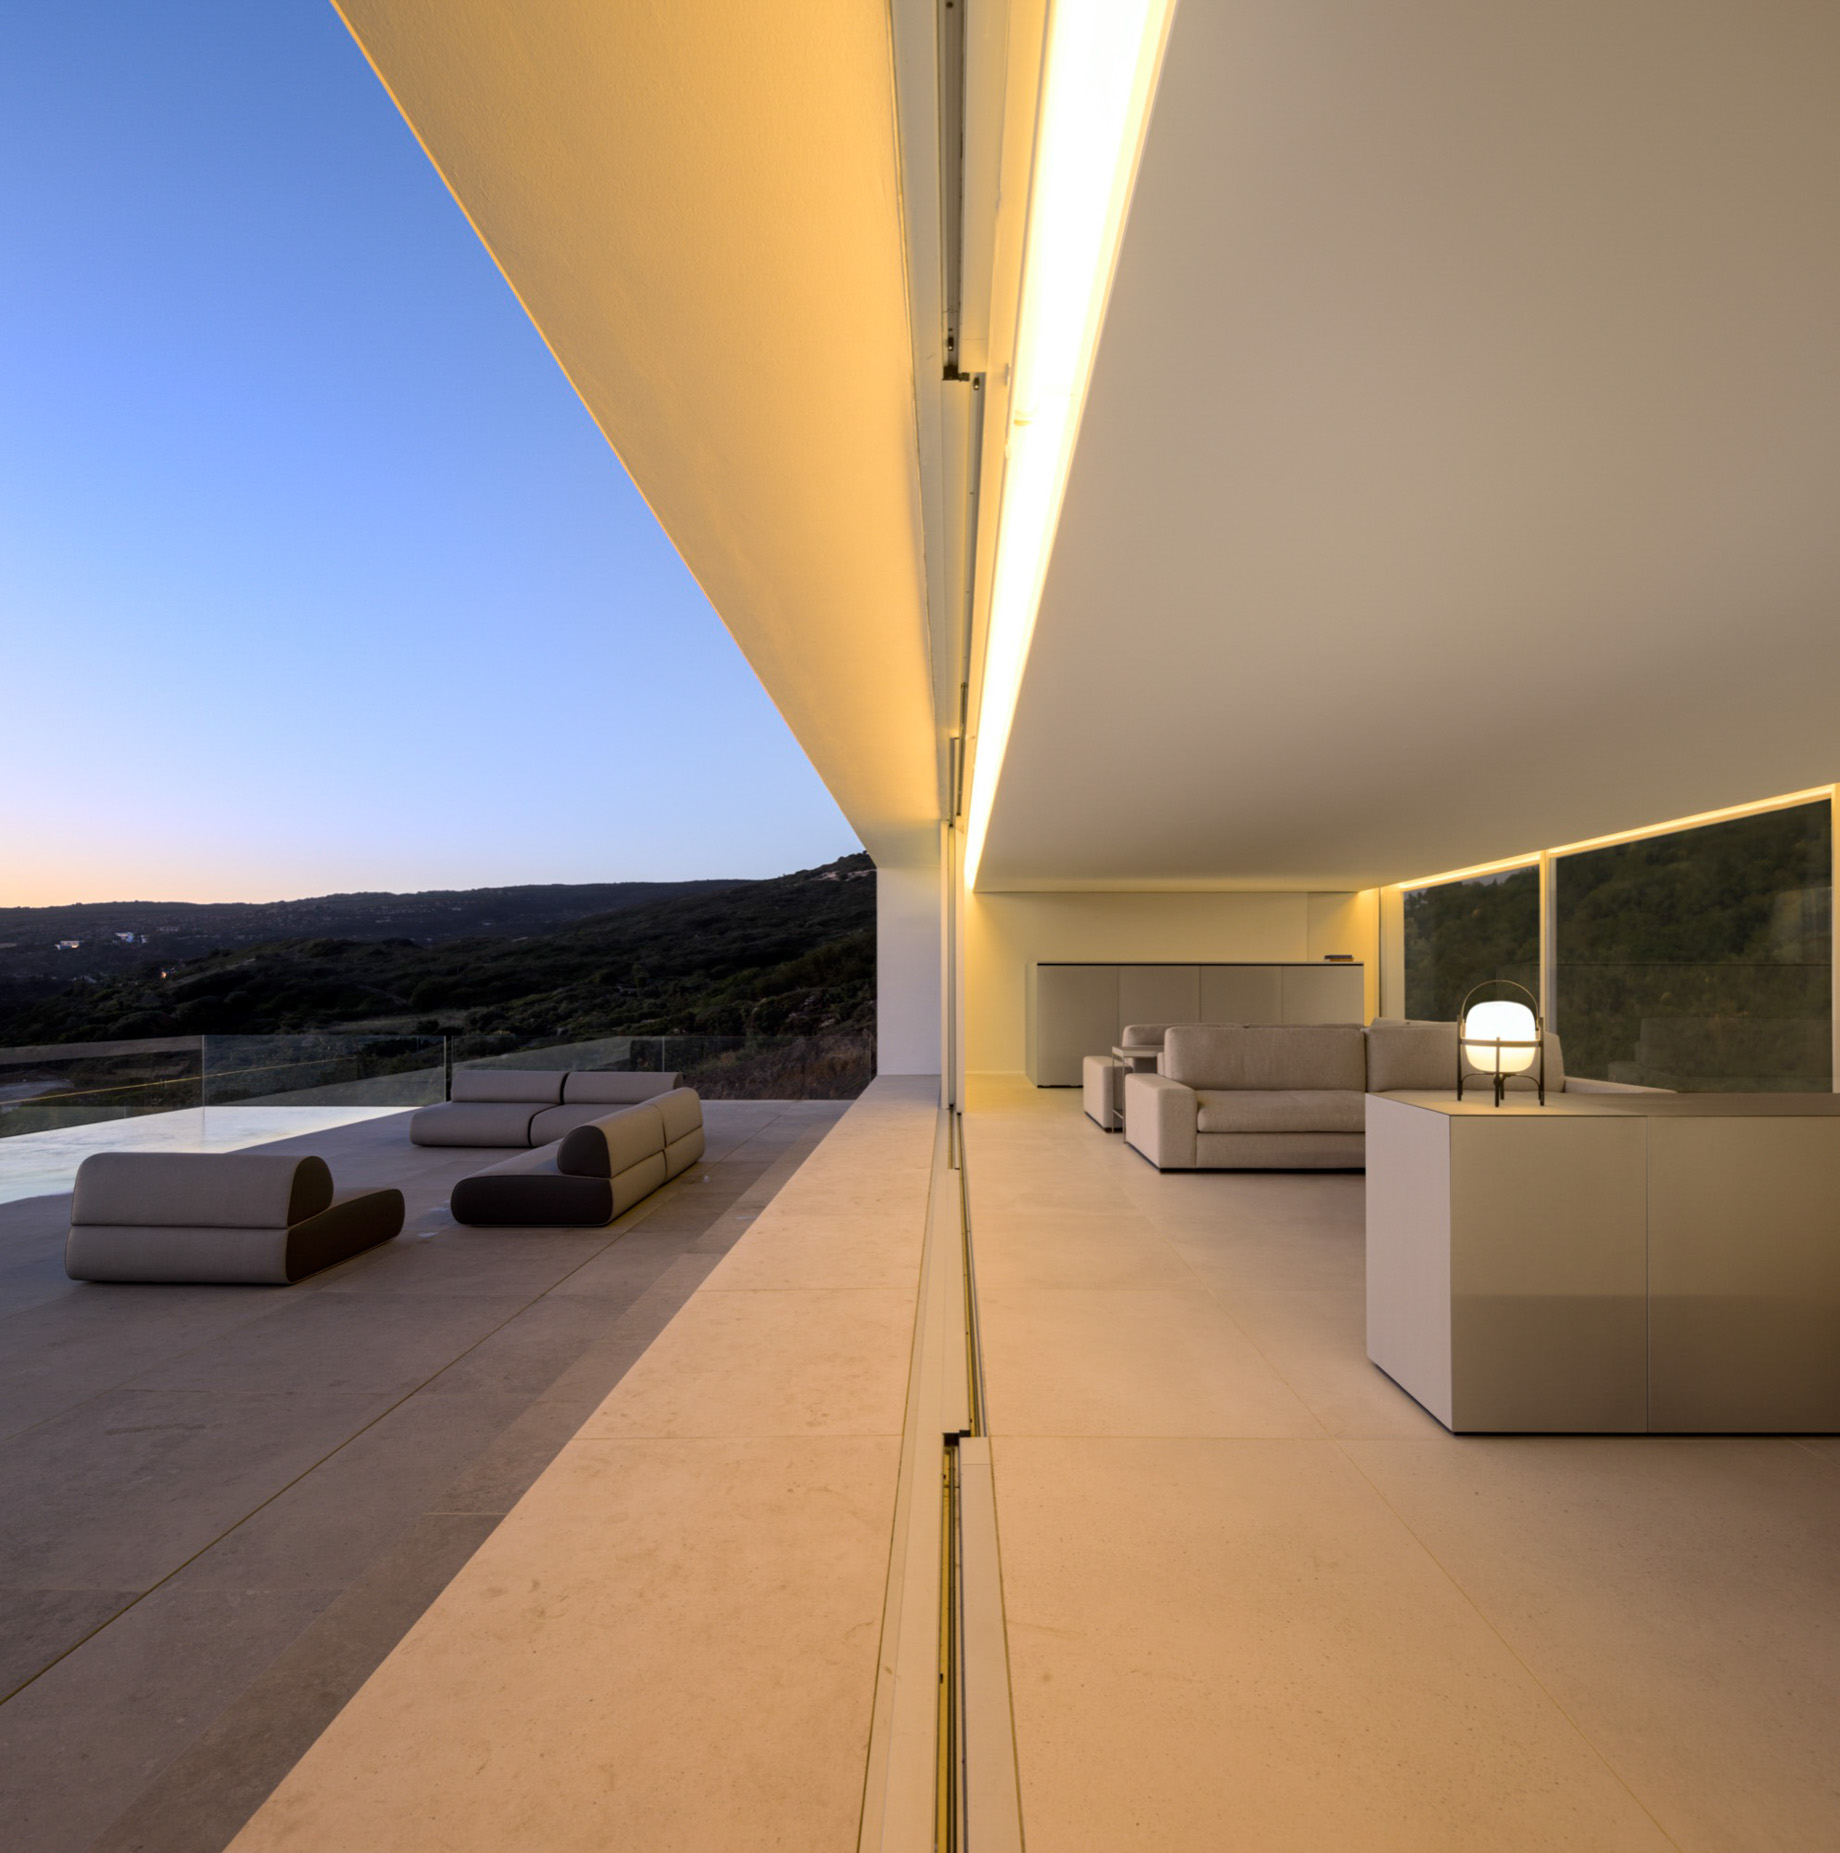 House on the Air Modern Contemporary Villa – Zahara de los Atunes, Spain – 61